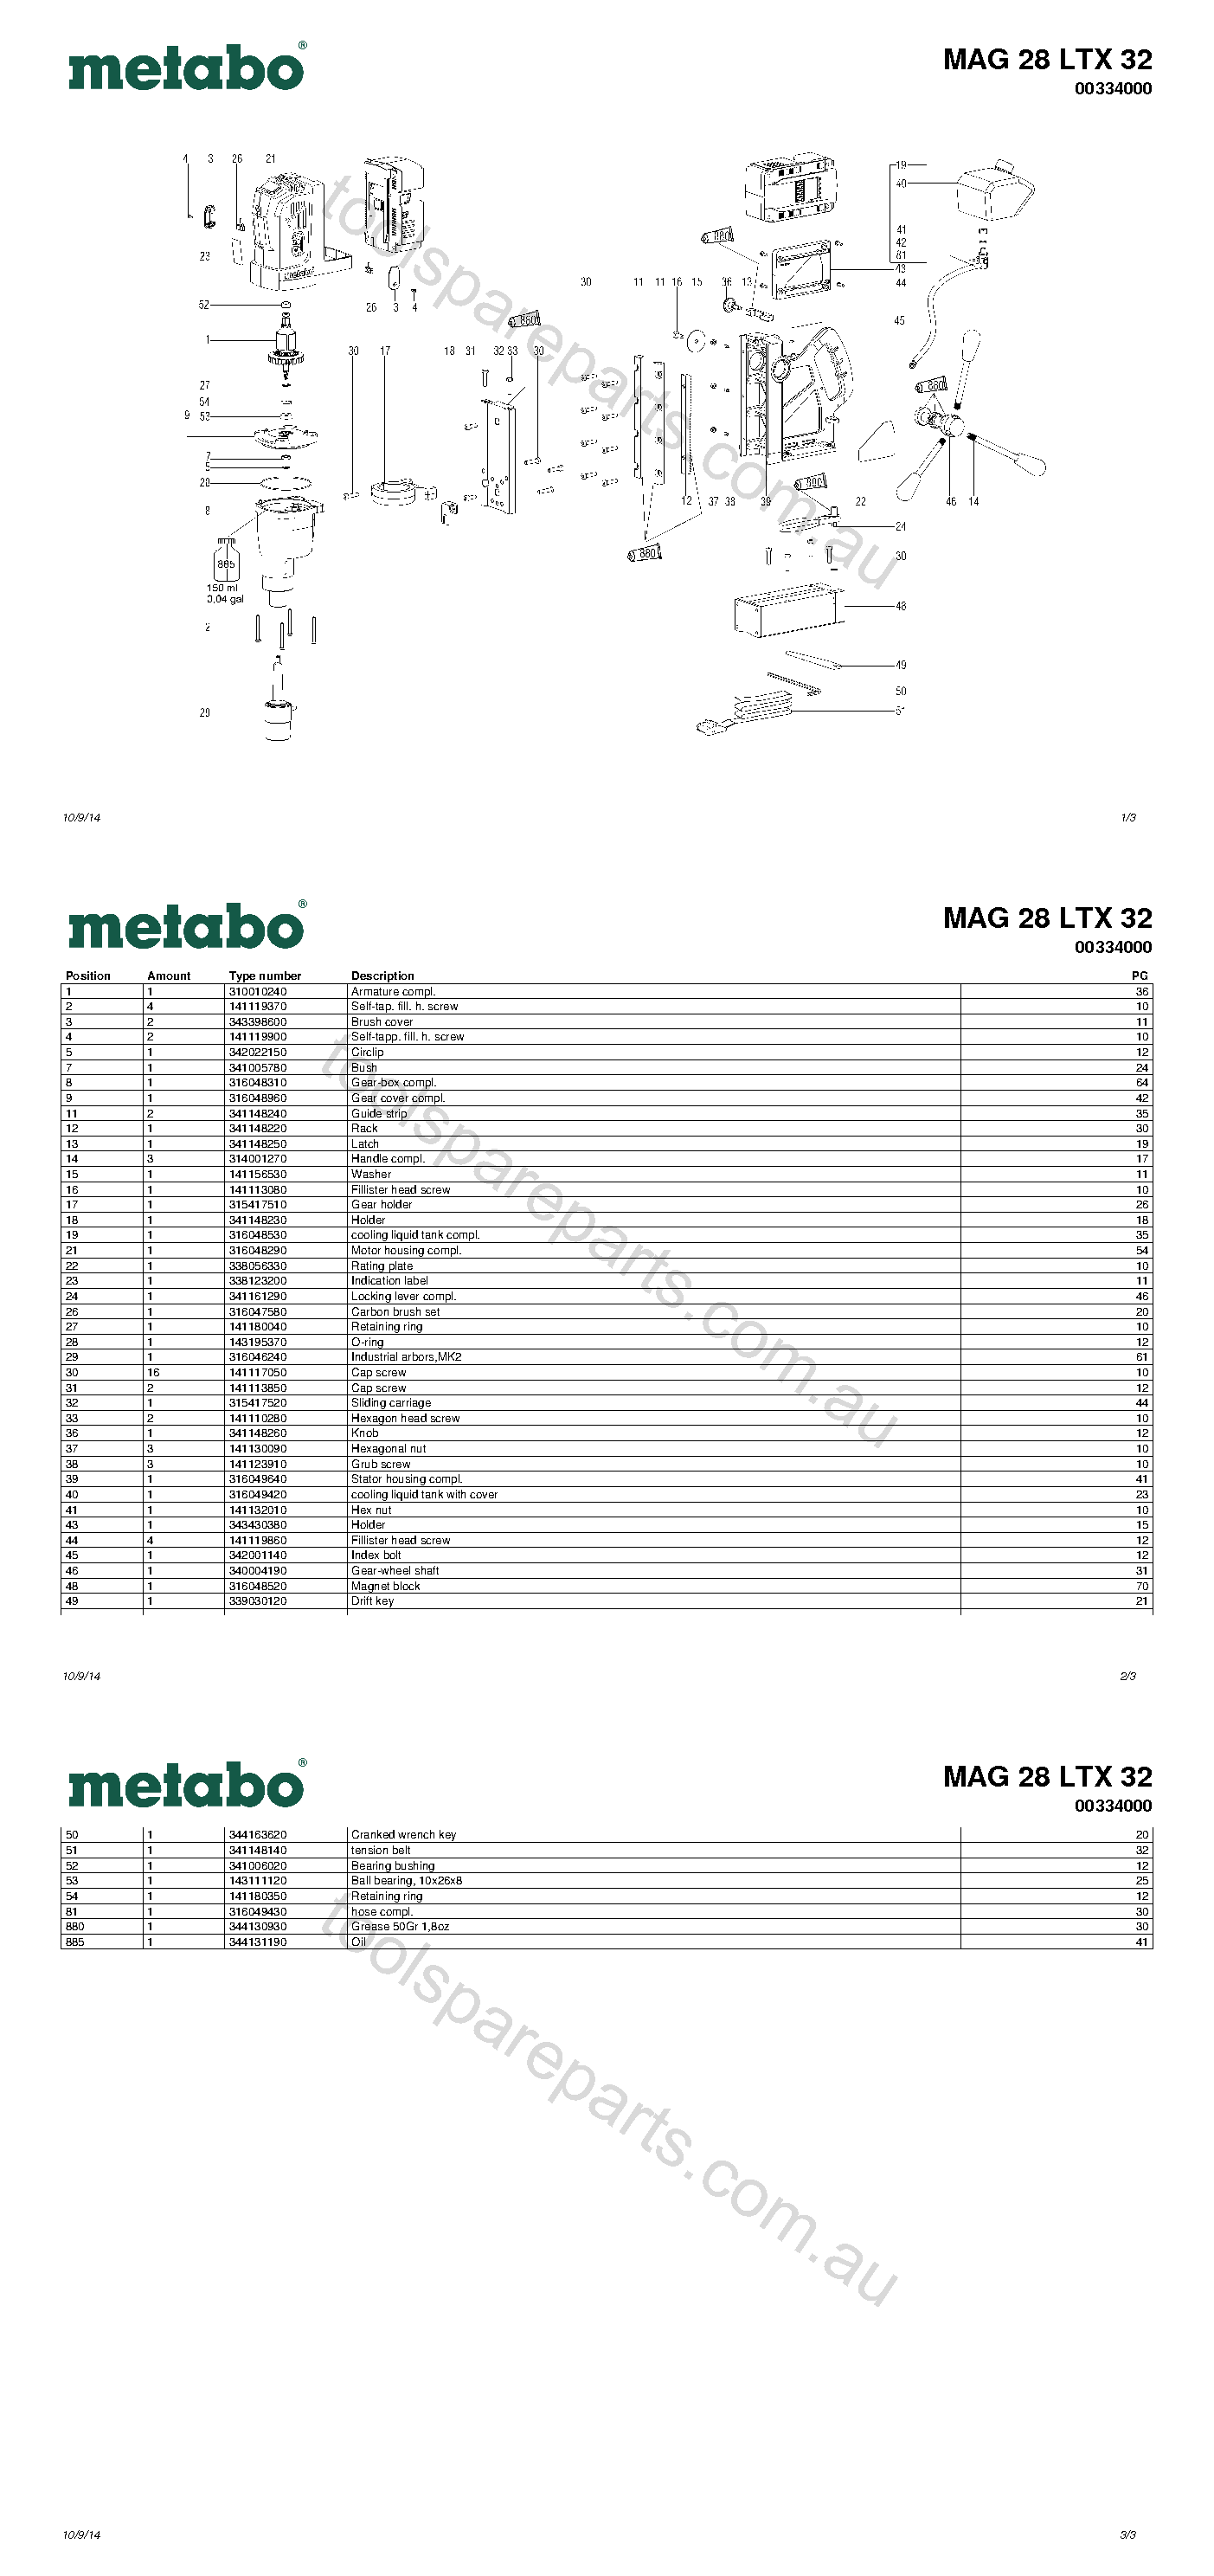 Metabo MAG 28 LTX 32 00334000  Diagram 1